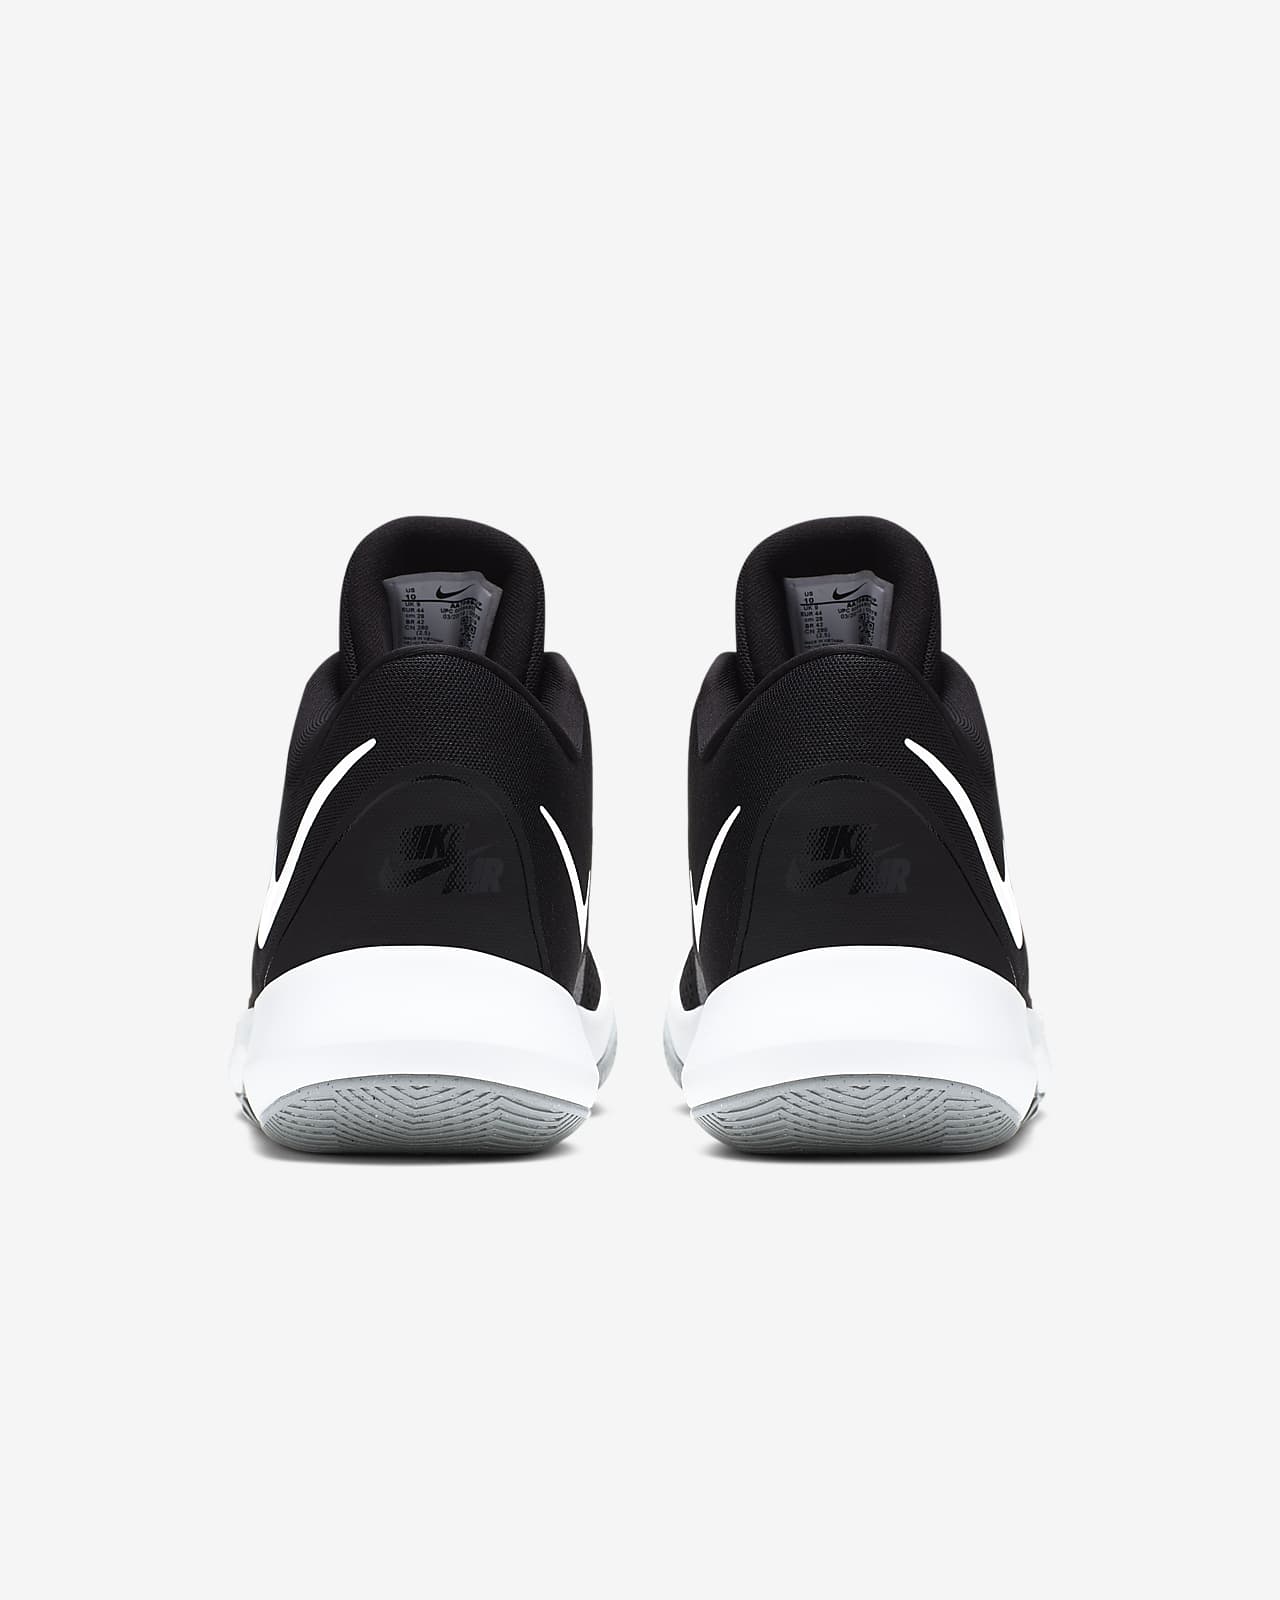 Nike Air Precision II Basketball Shoe 